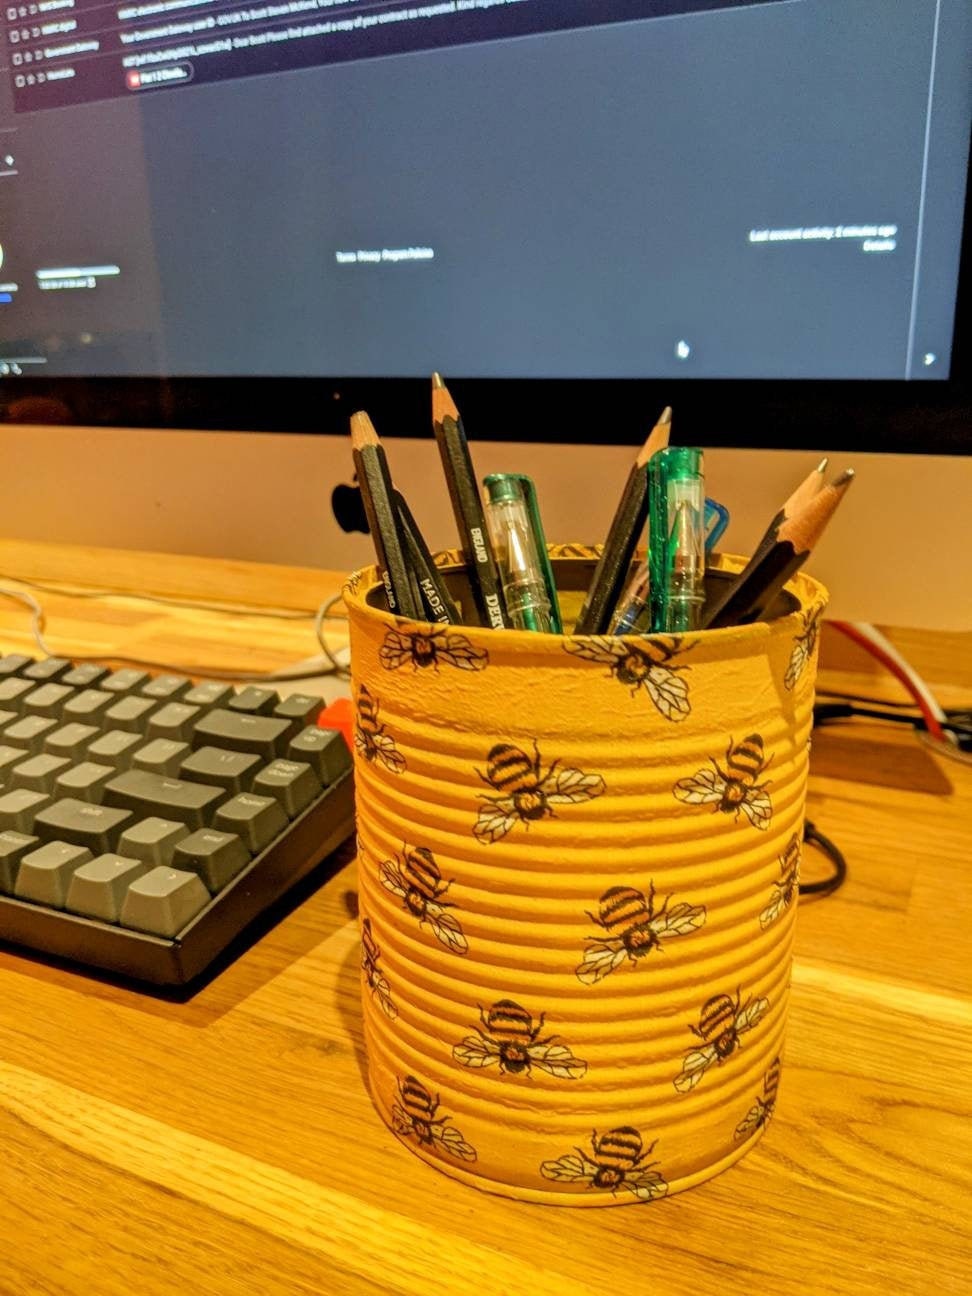 Honeycomb Desk Organizer Pen Holder / Pencil Holder / Planner / Pen Holder  / Desk Organizer / Bees / 3D Printed 